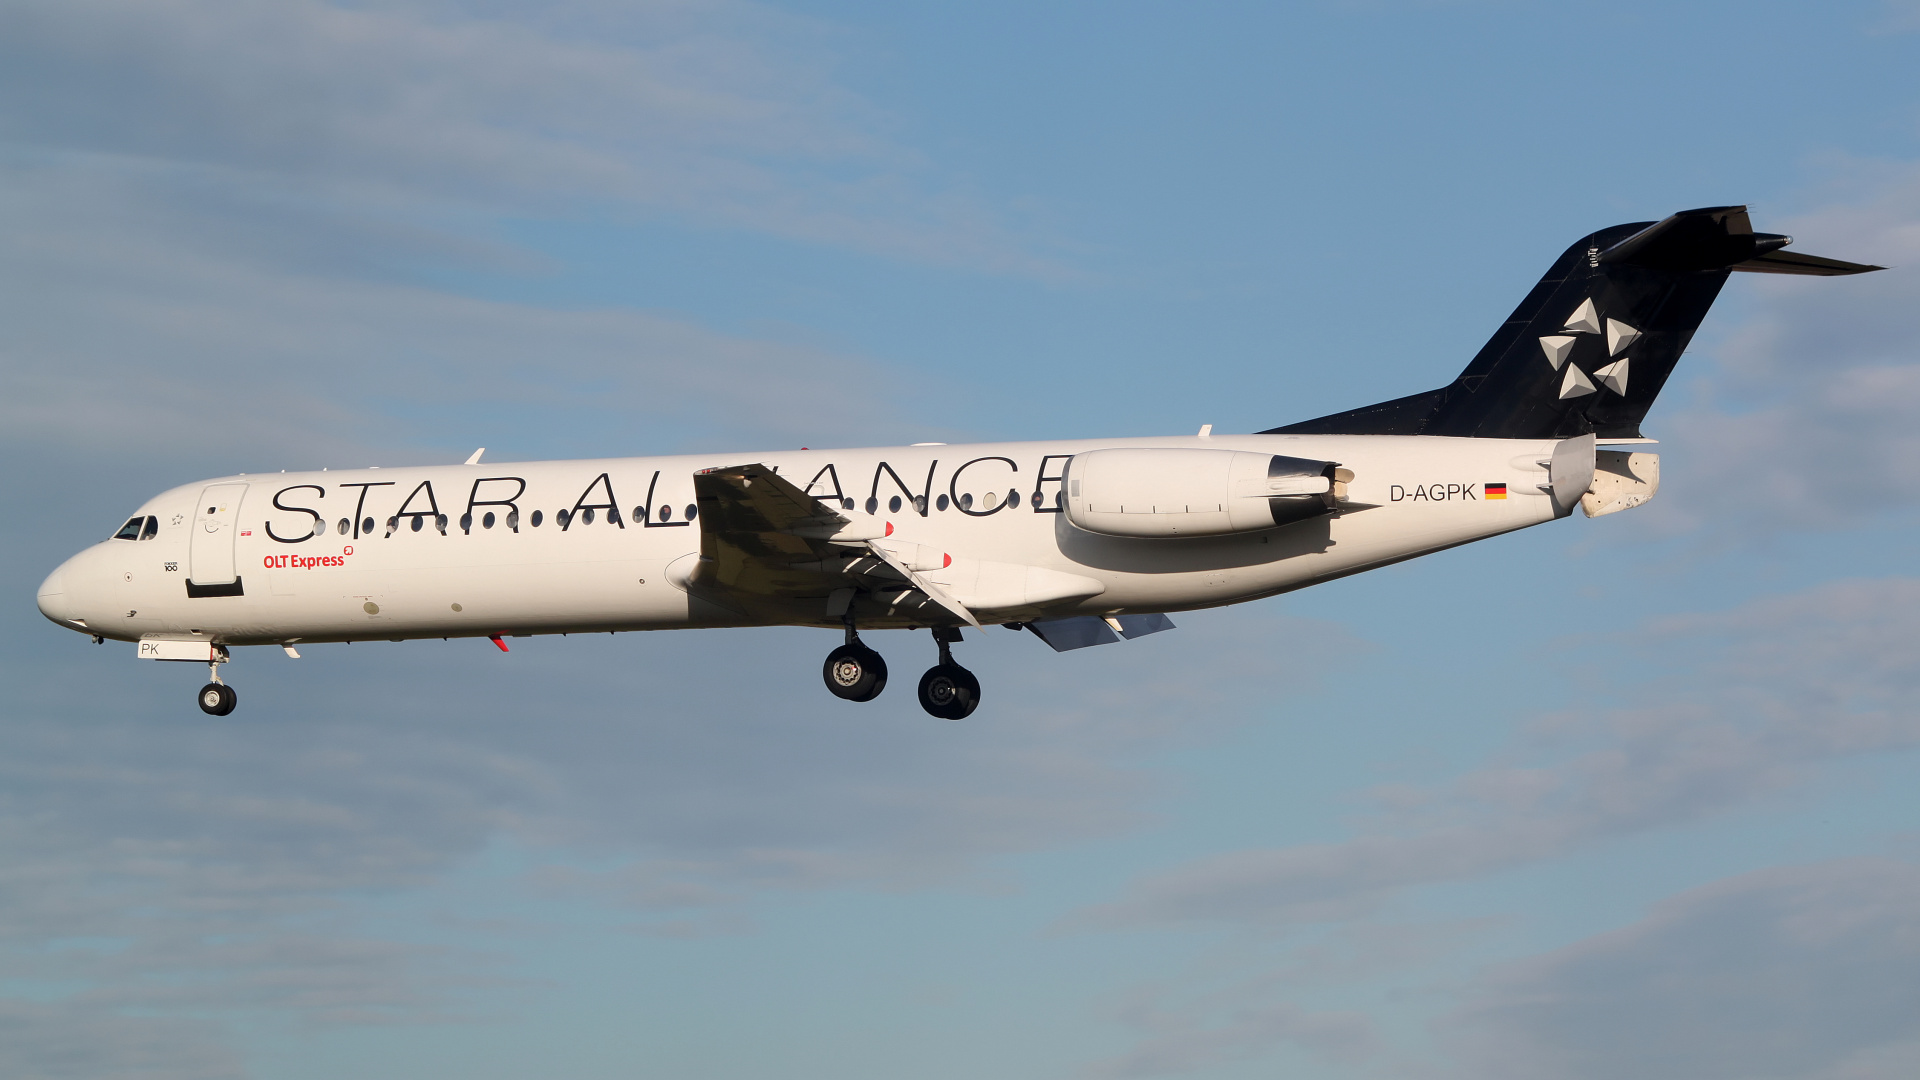 D-AGPK, OLT Express (Star Alliance livery) (Aircraft » EPWA Spotting » Fokker 100)